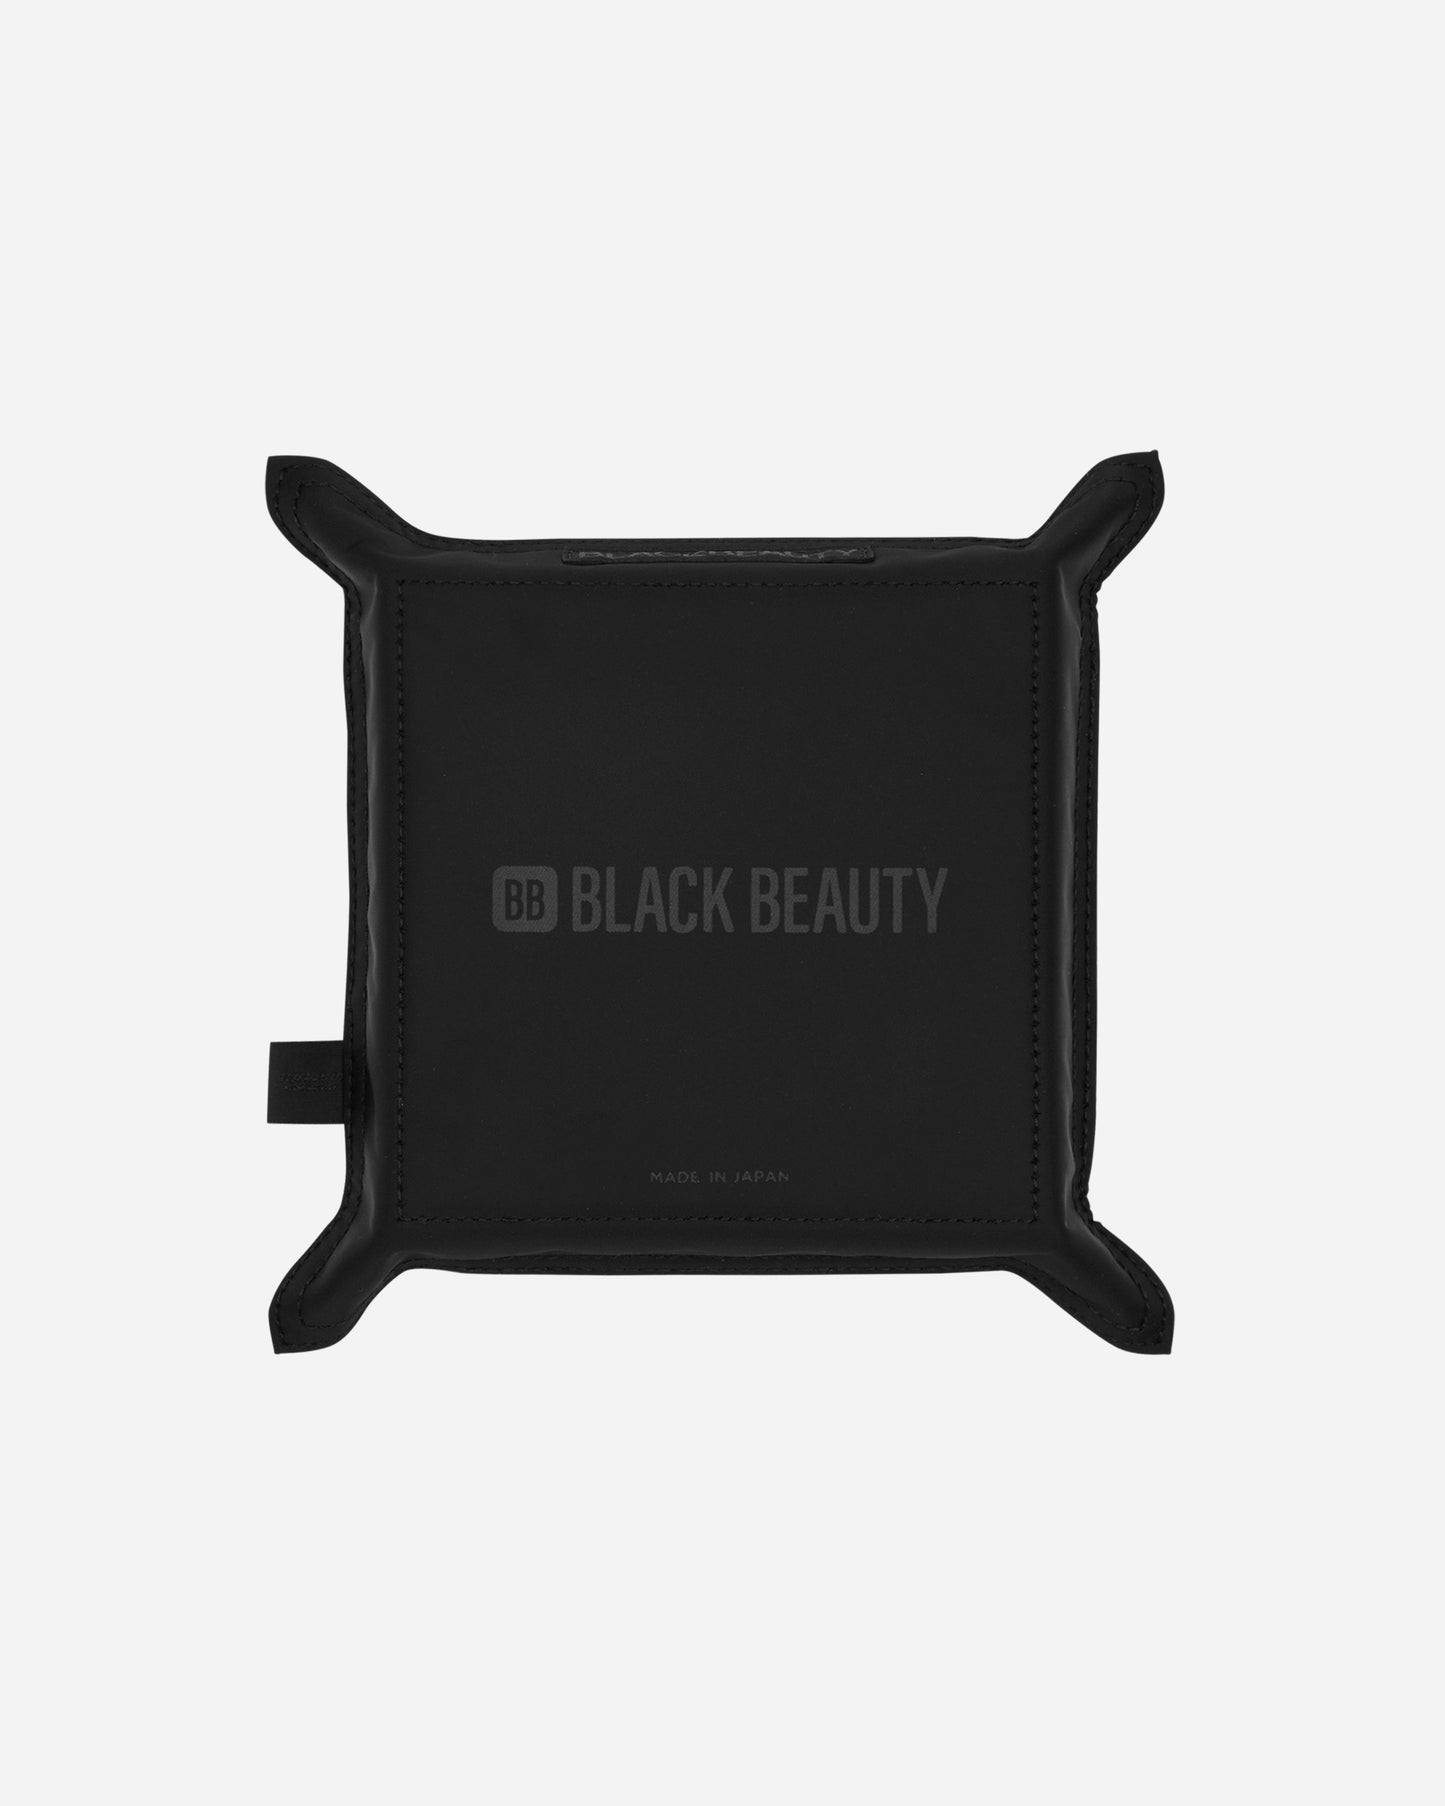 Ramidus Tray (M) X Fragment Design Black Homeware Design Items B017014  001